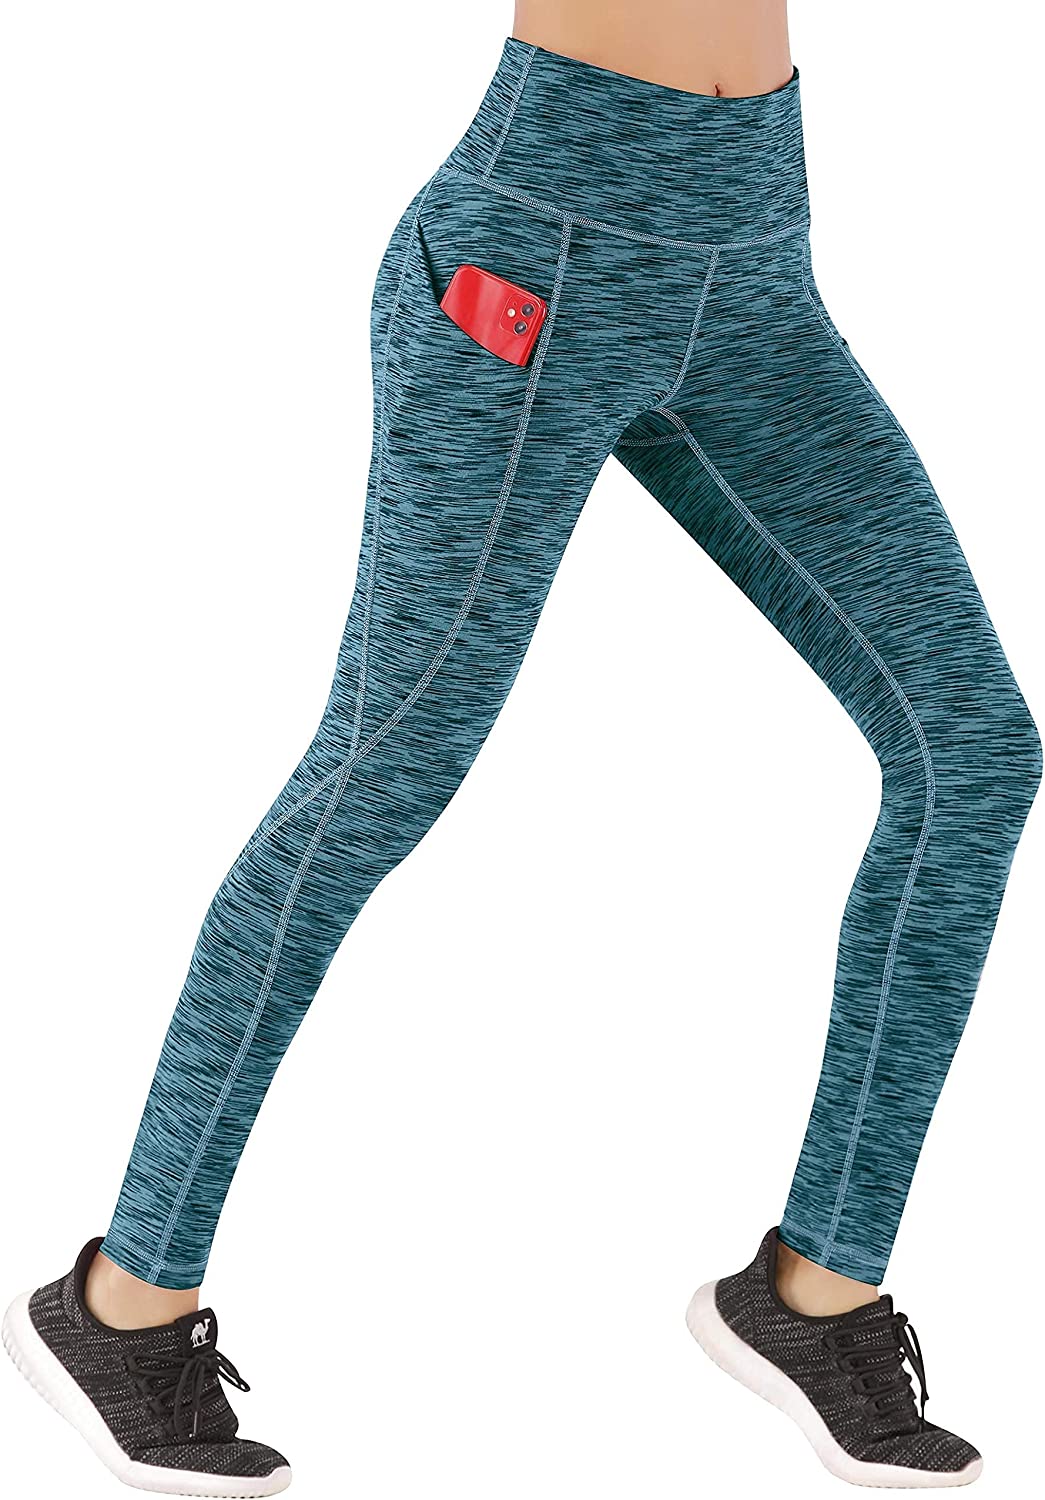 Buy ODODOSWomen's High Waisted Yoga Leggings with Pockets, Tummy